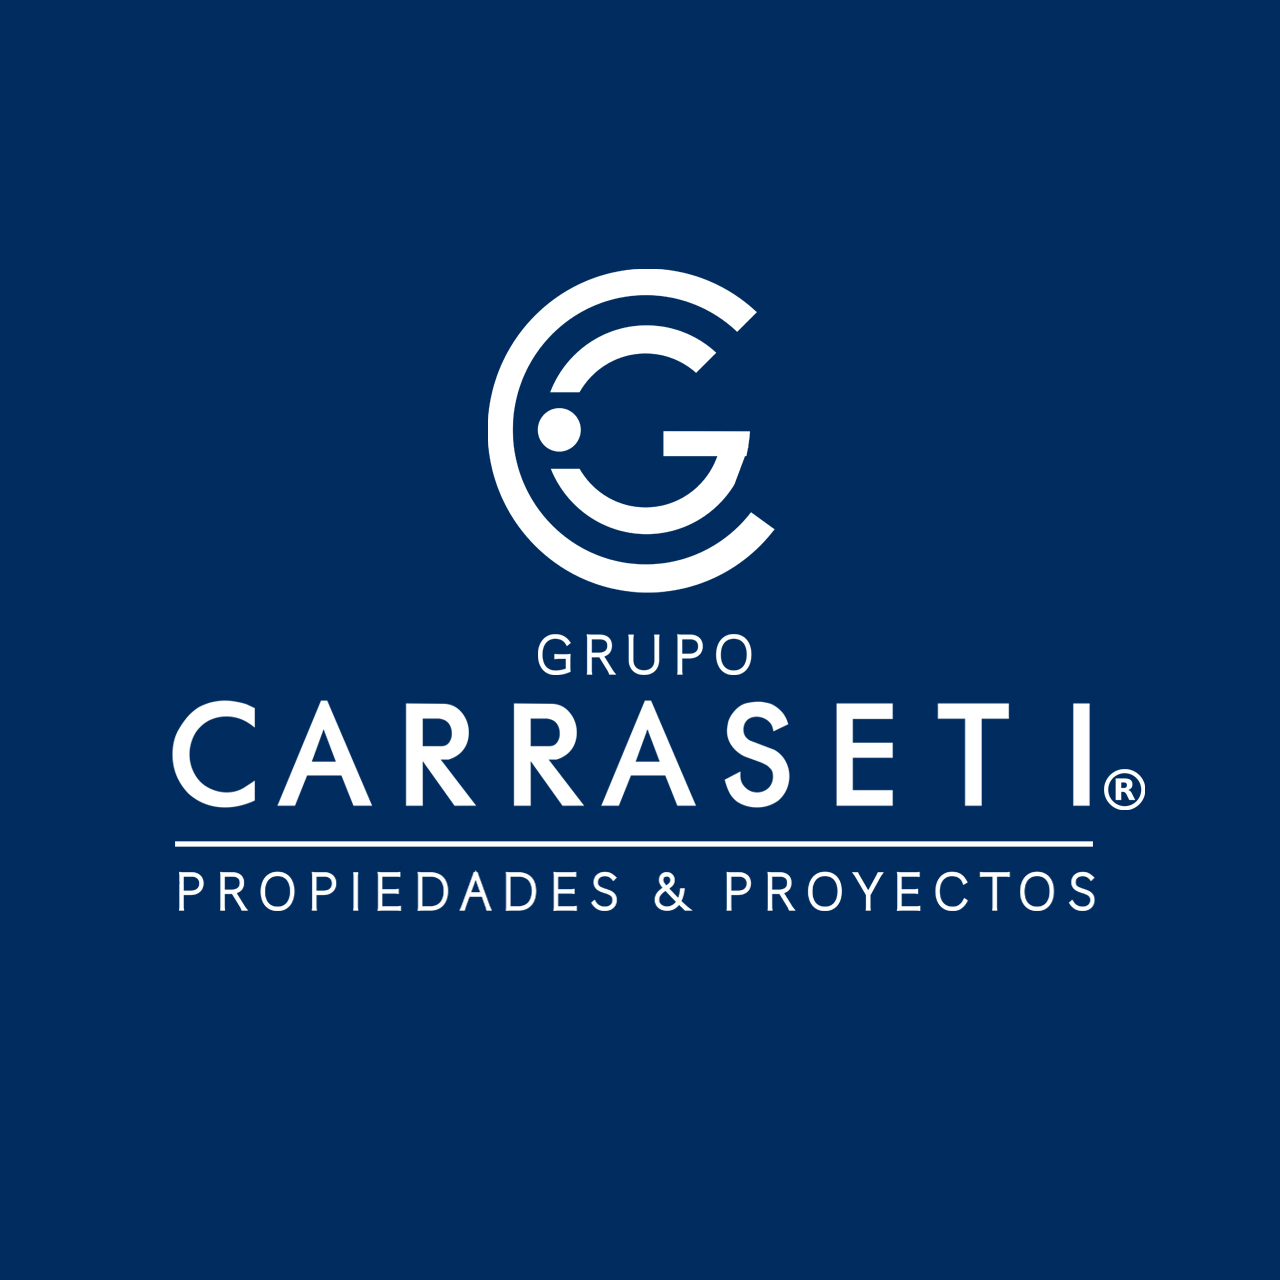 Grupo Carraseti logo